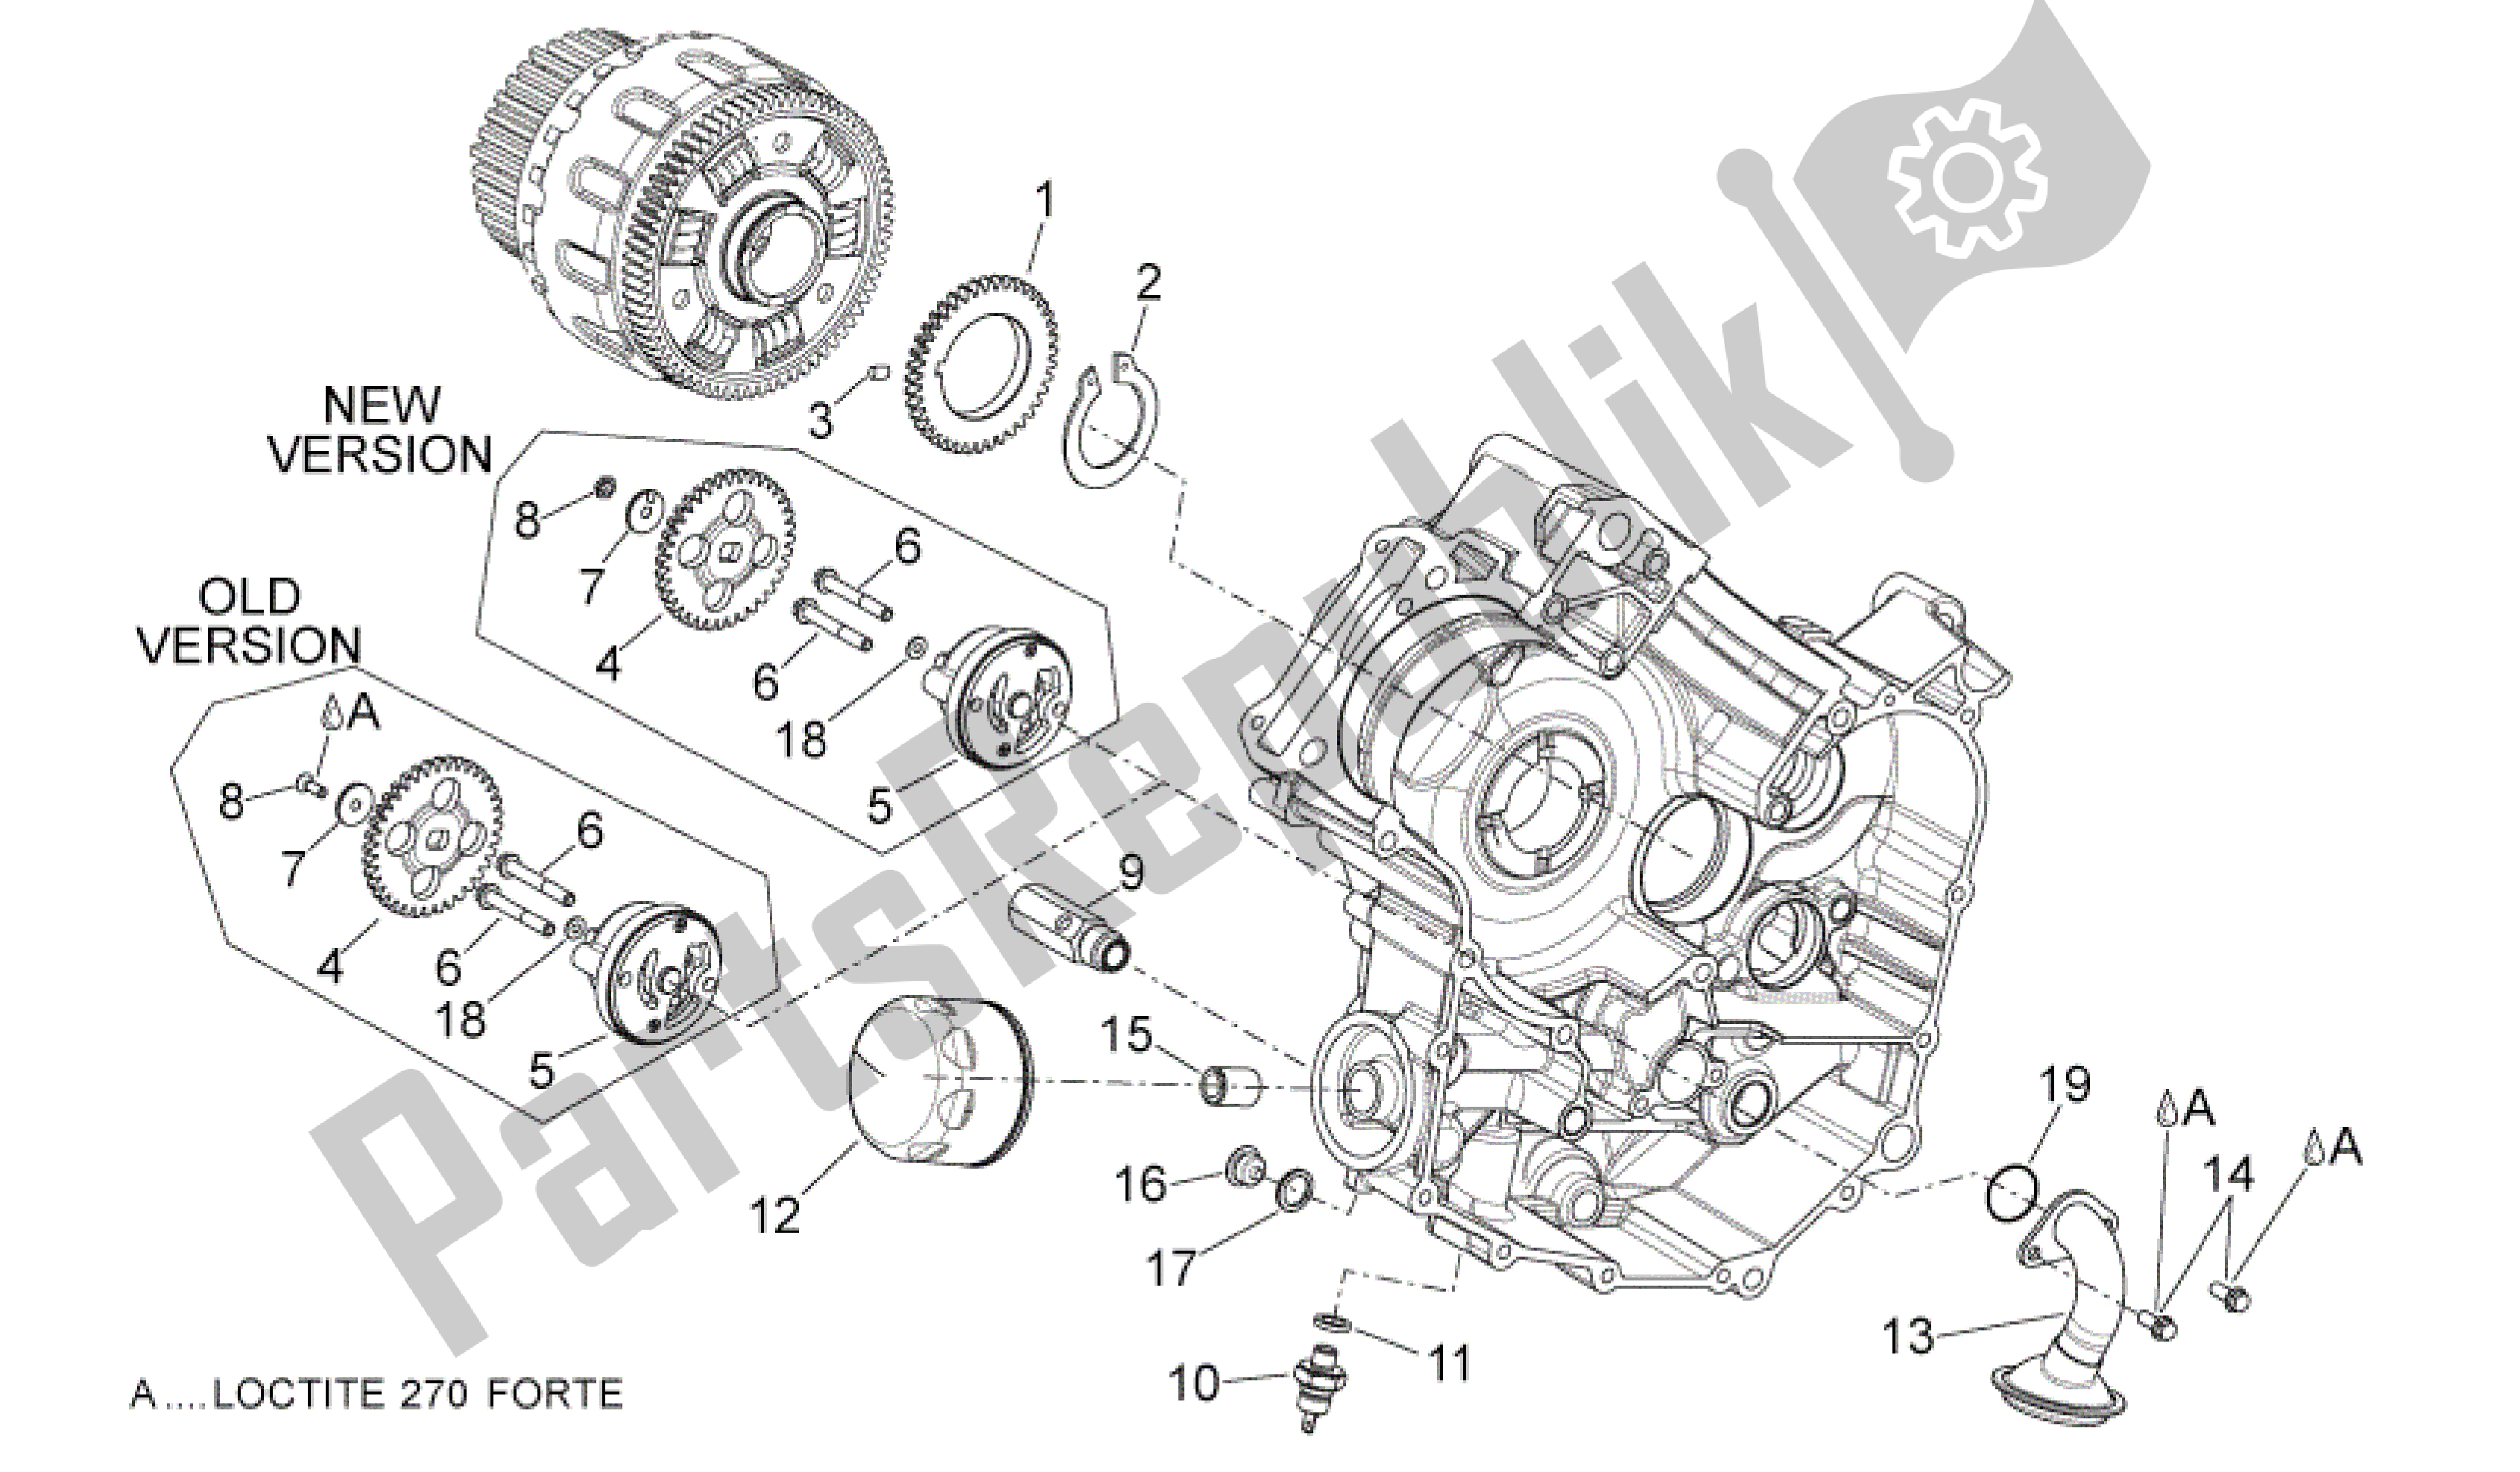 All parts for the Oil Pump of the Aprilia Shiver 750 2007 - 2009